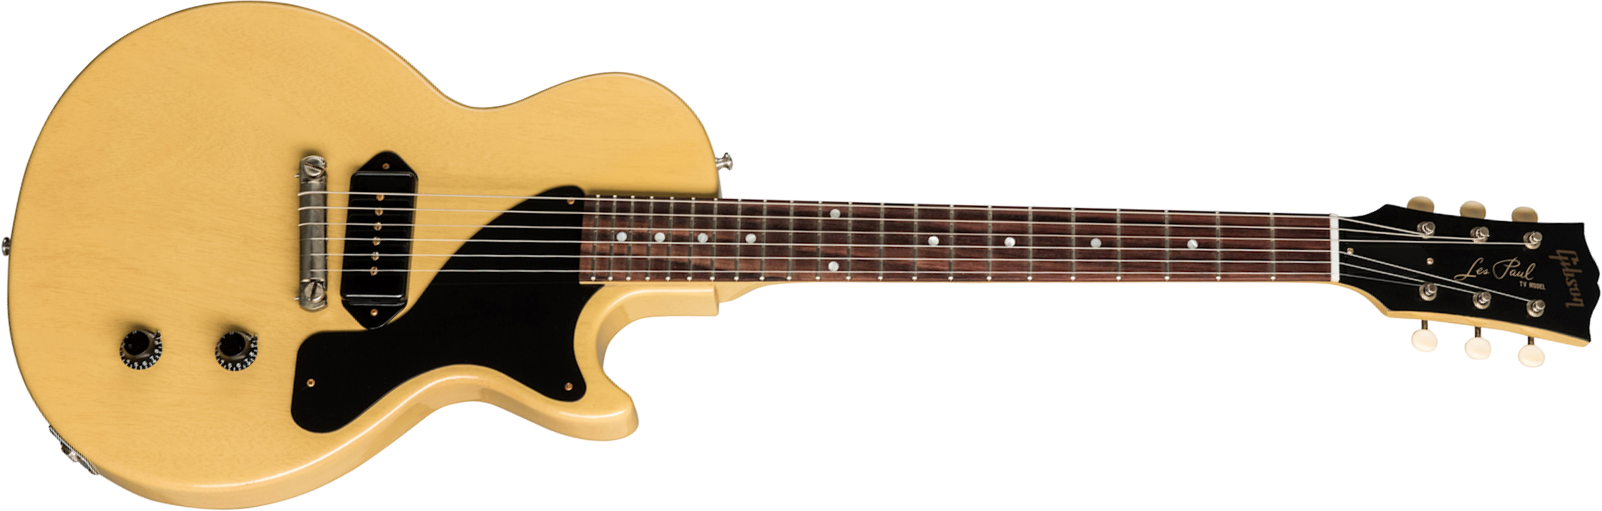 Gibson Custom Shop Les Paul Junior 1957 Single Cut Reissue P90 Ht Rw - Vos Tv Yellow - Enkel gesneden elektrische gitaar - Main picture